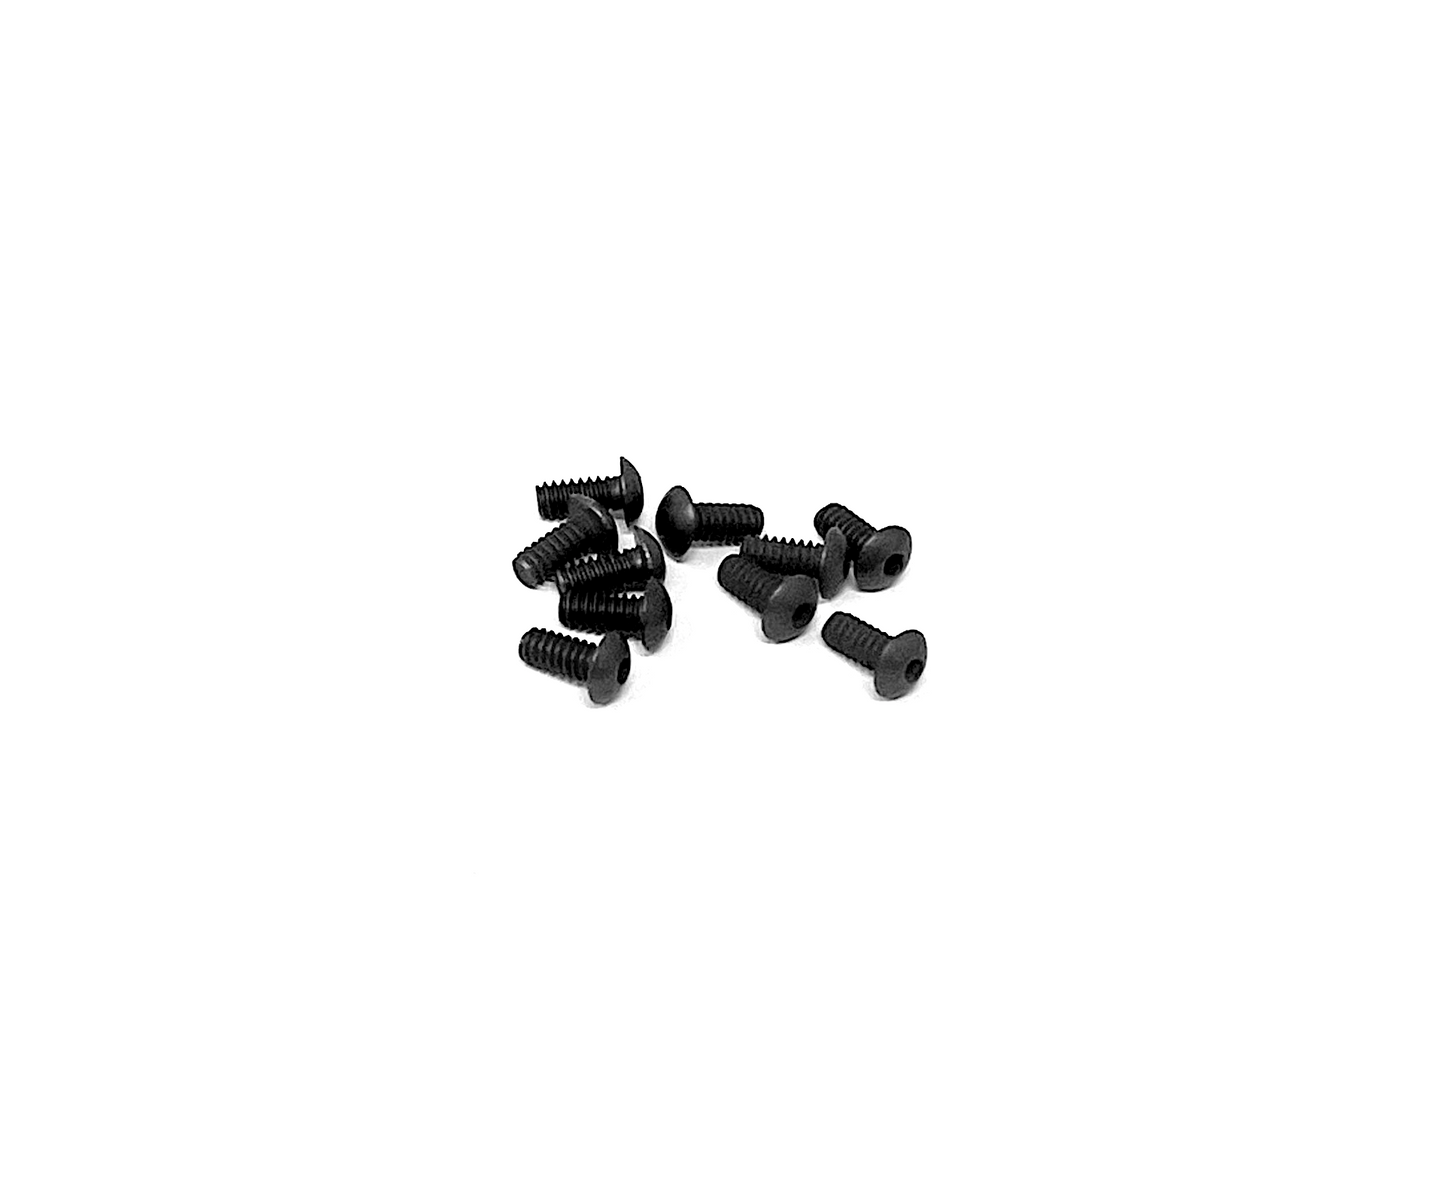 4-40 x 1 /4 Button Head Socket Screws - Aluminum